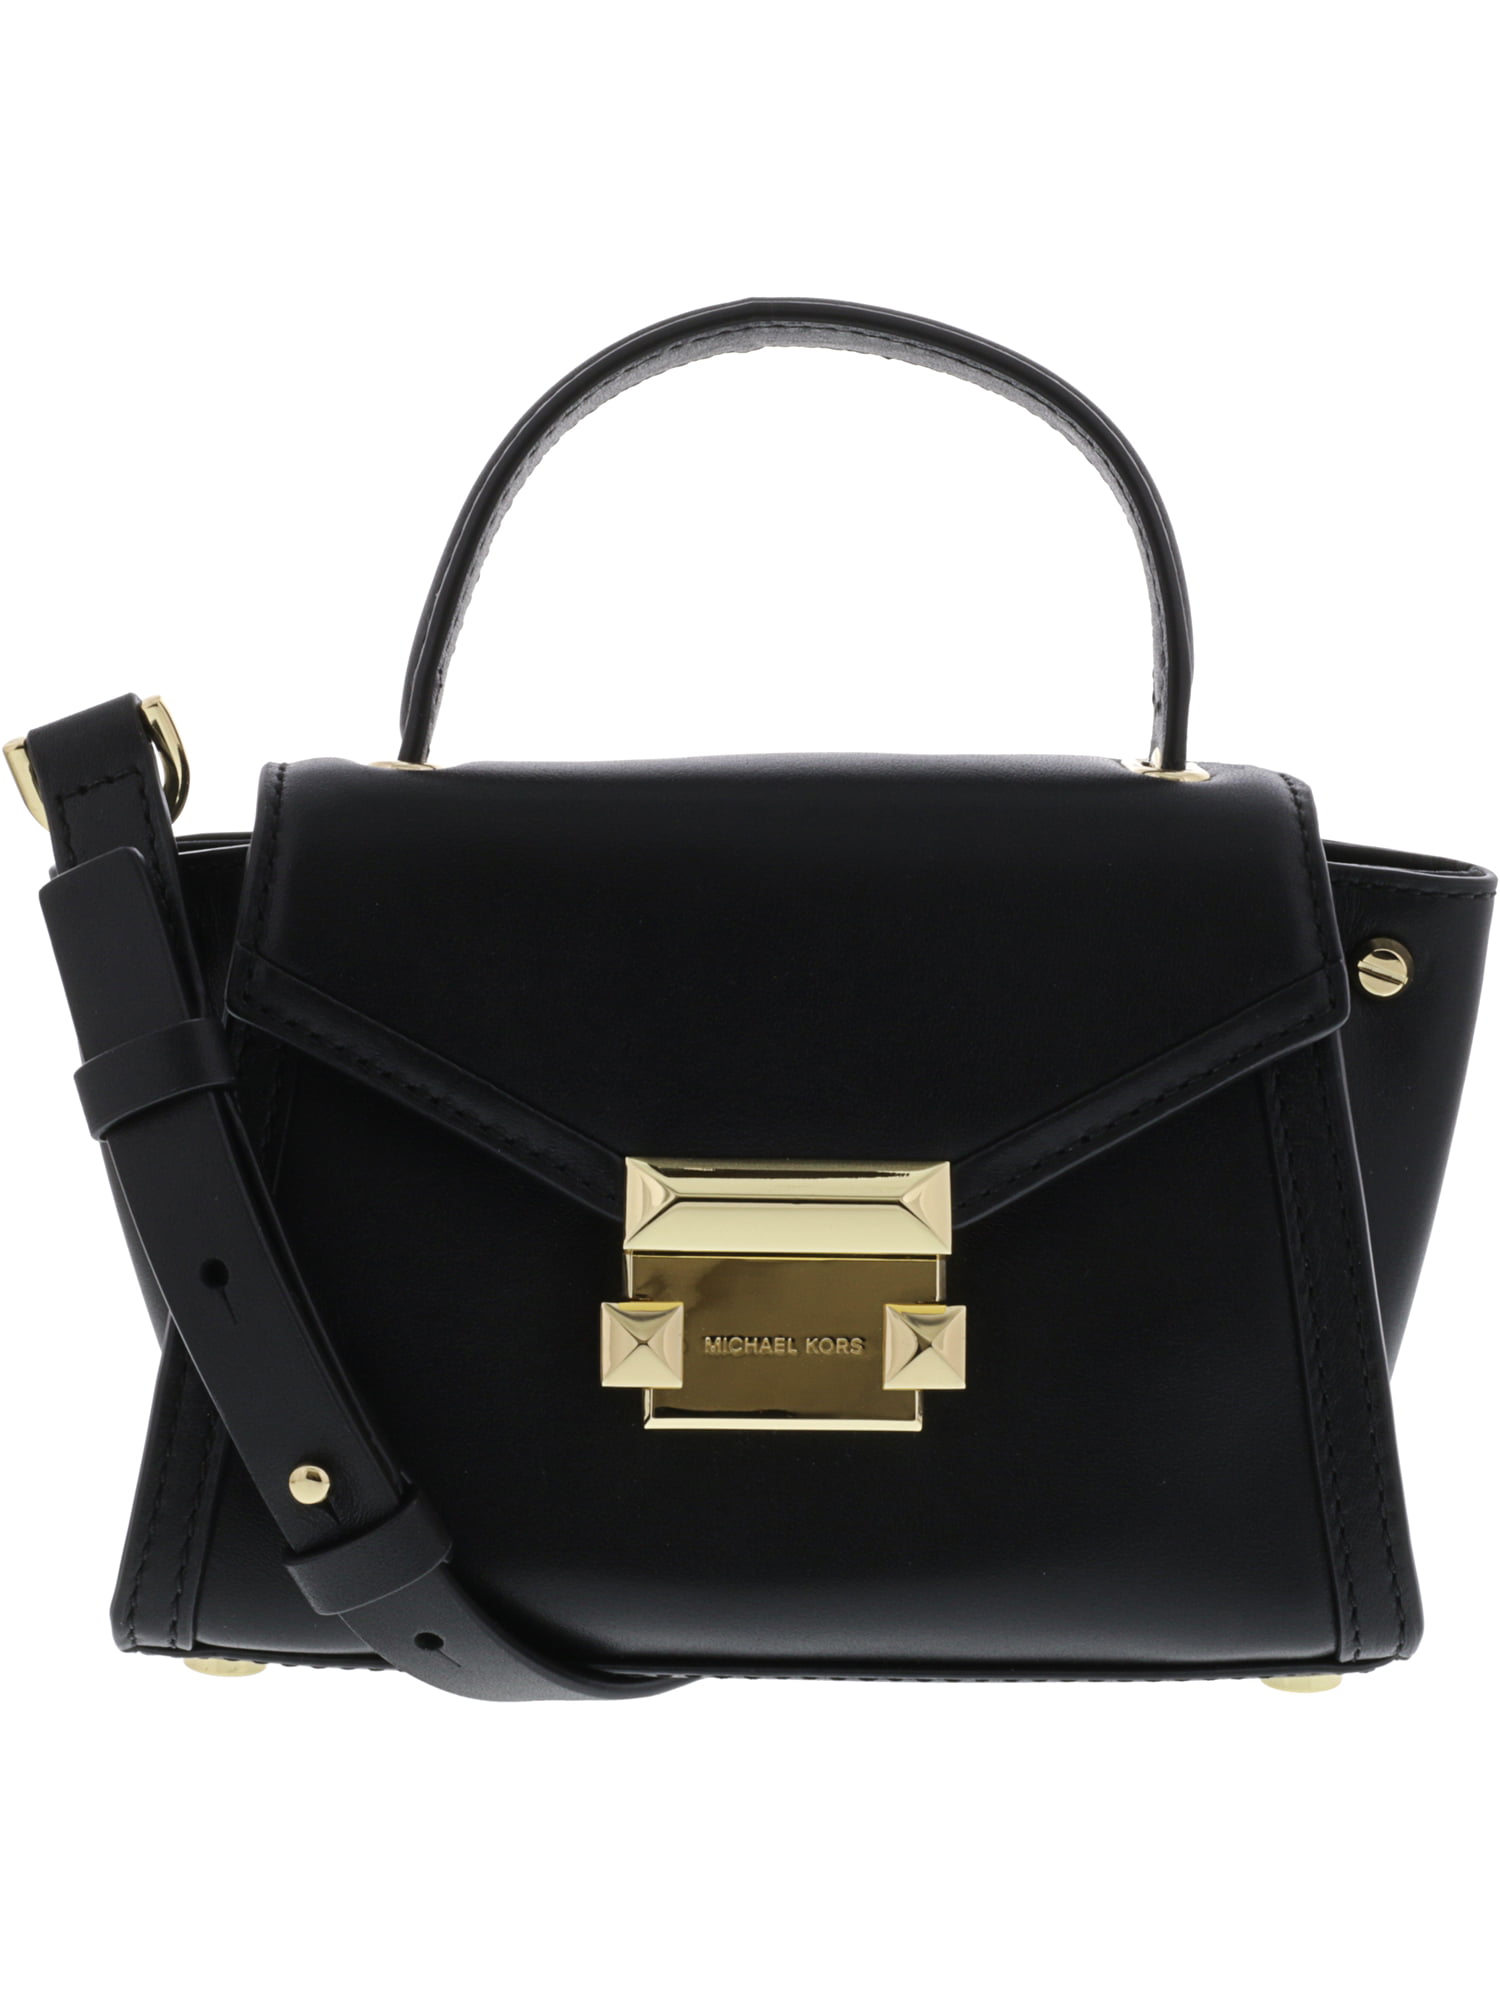 michael kors black leather satchel handbag